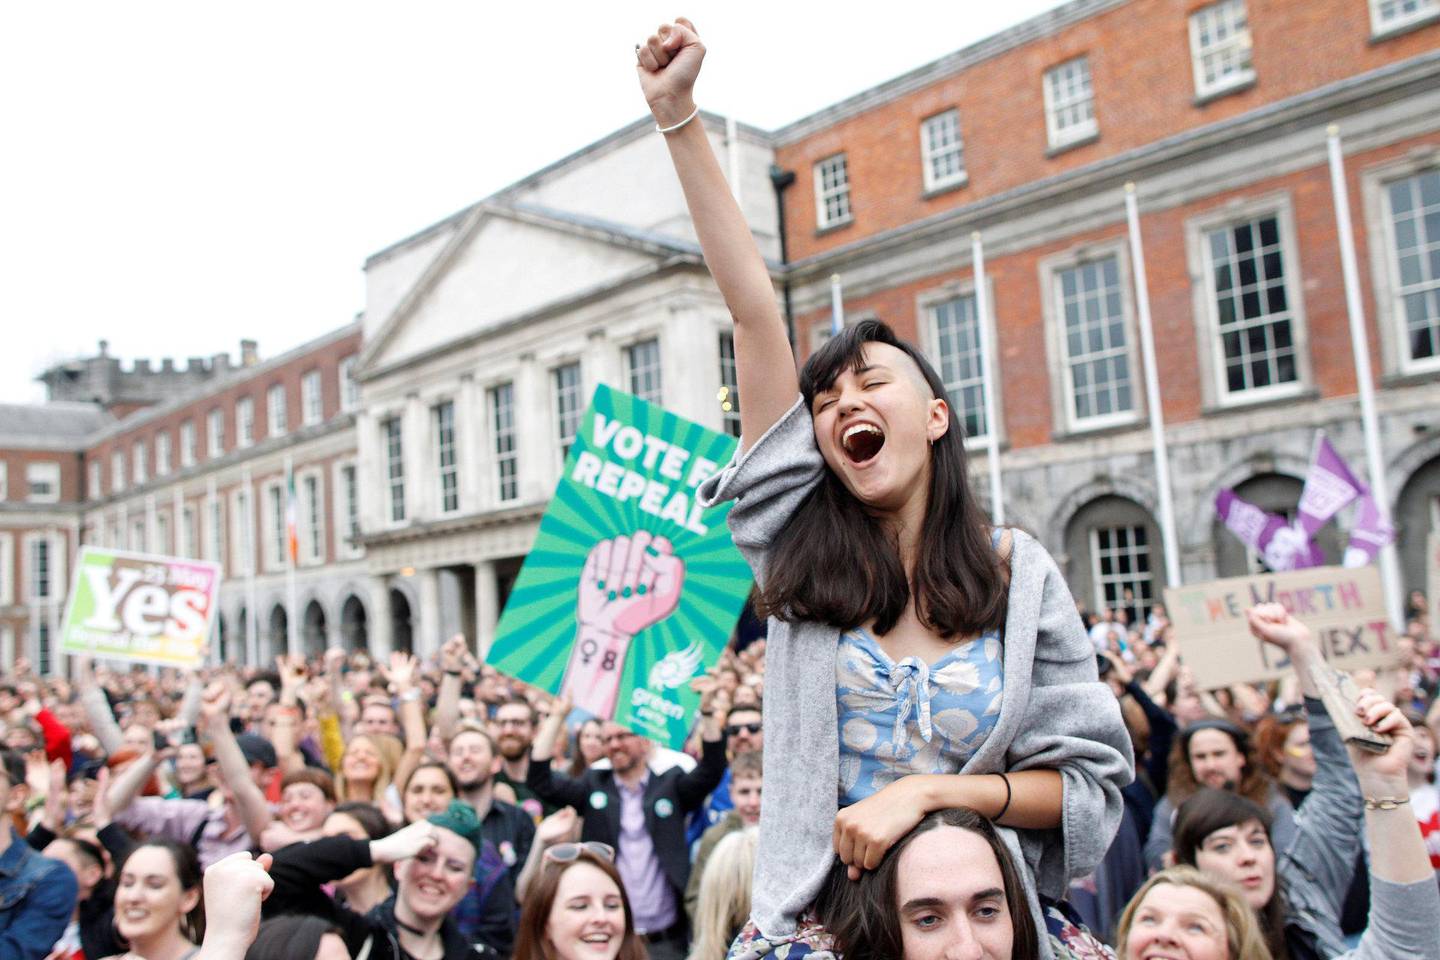 STEMTE: Irland holdt folkeavstemning om abort i fjor. FOTO: NTB SCANPIX